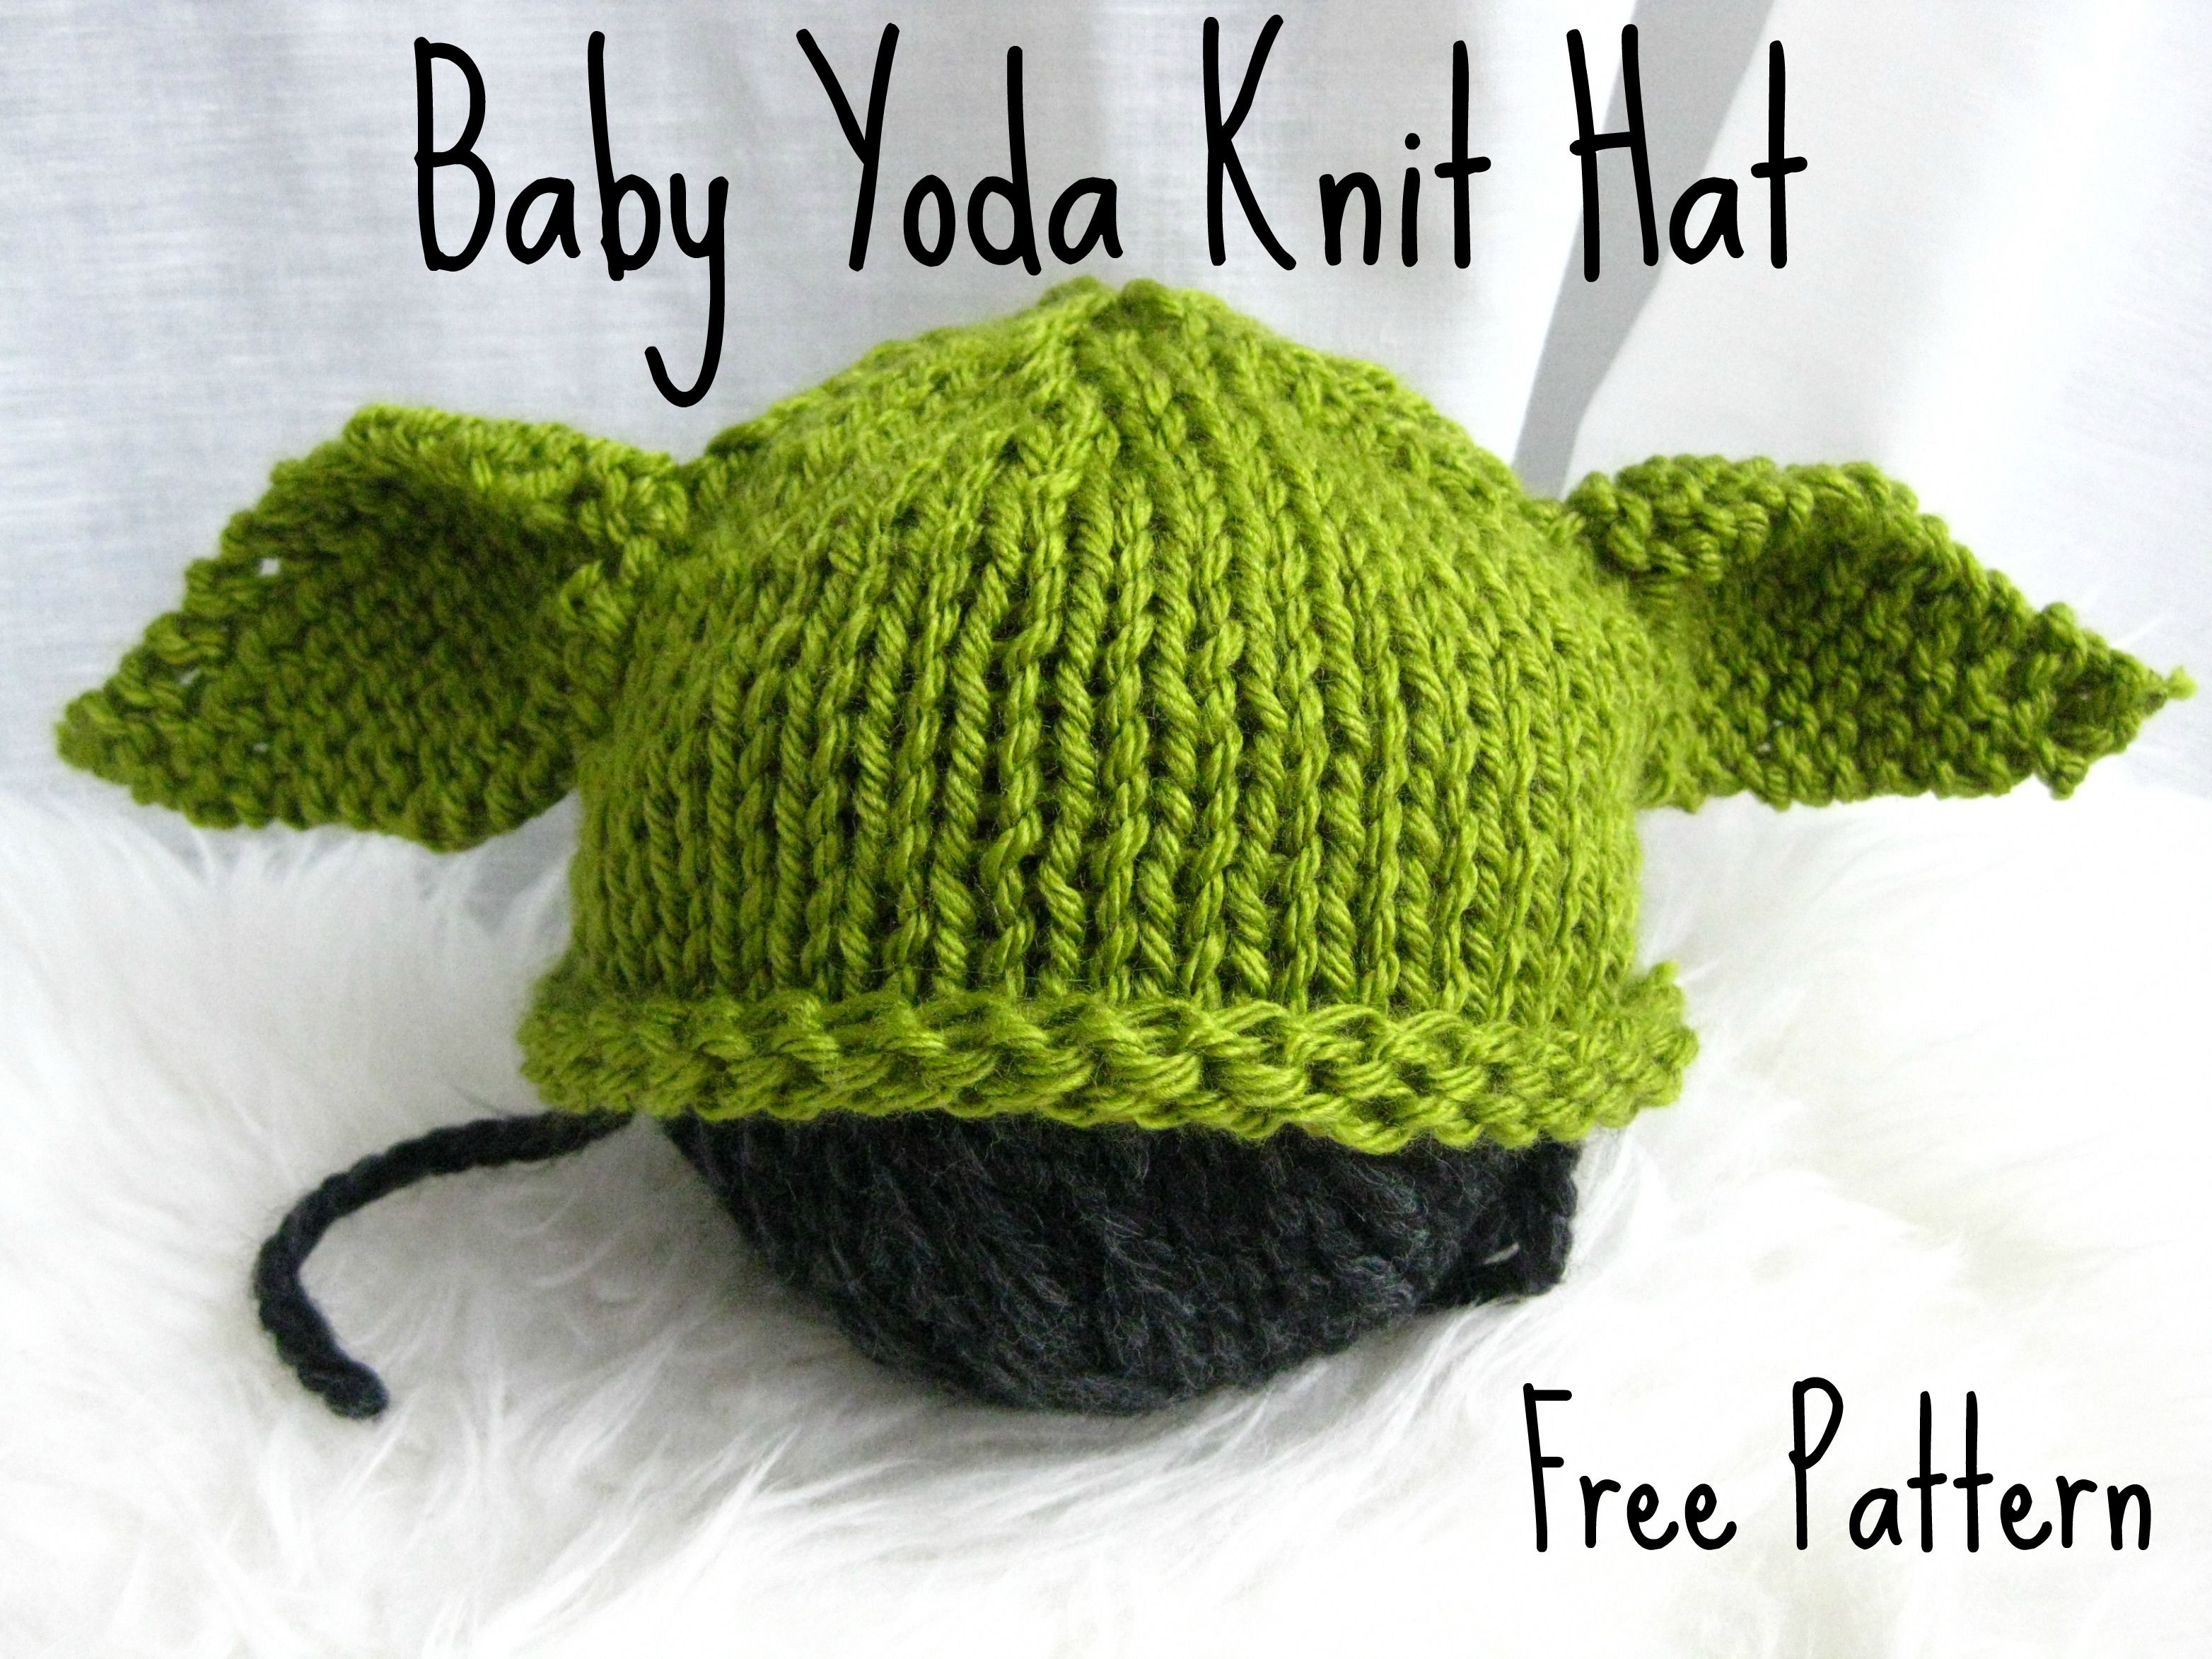 Free Crochet Yoda Hat Pattern Ba Yoda Knit Hat With Free Pattern Knitting Diy Pinterest